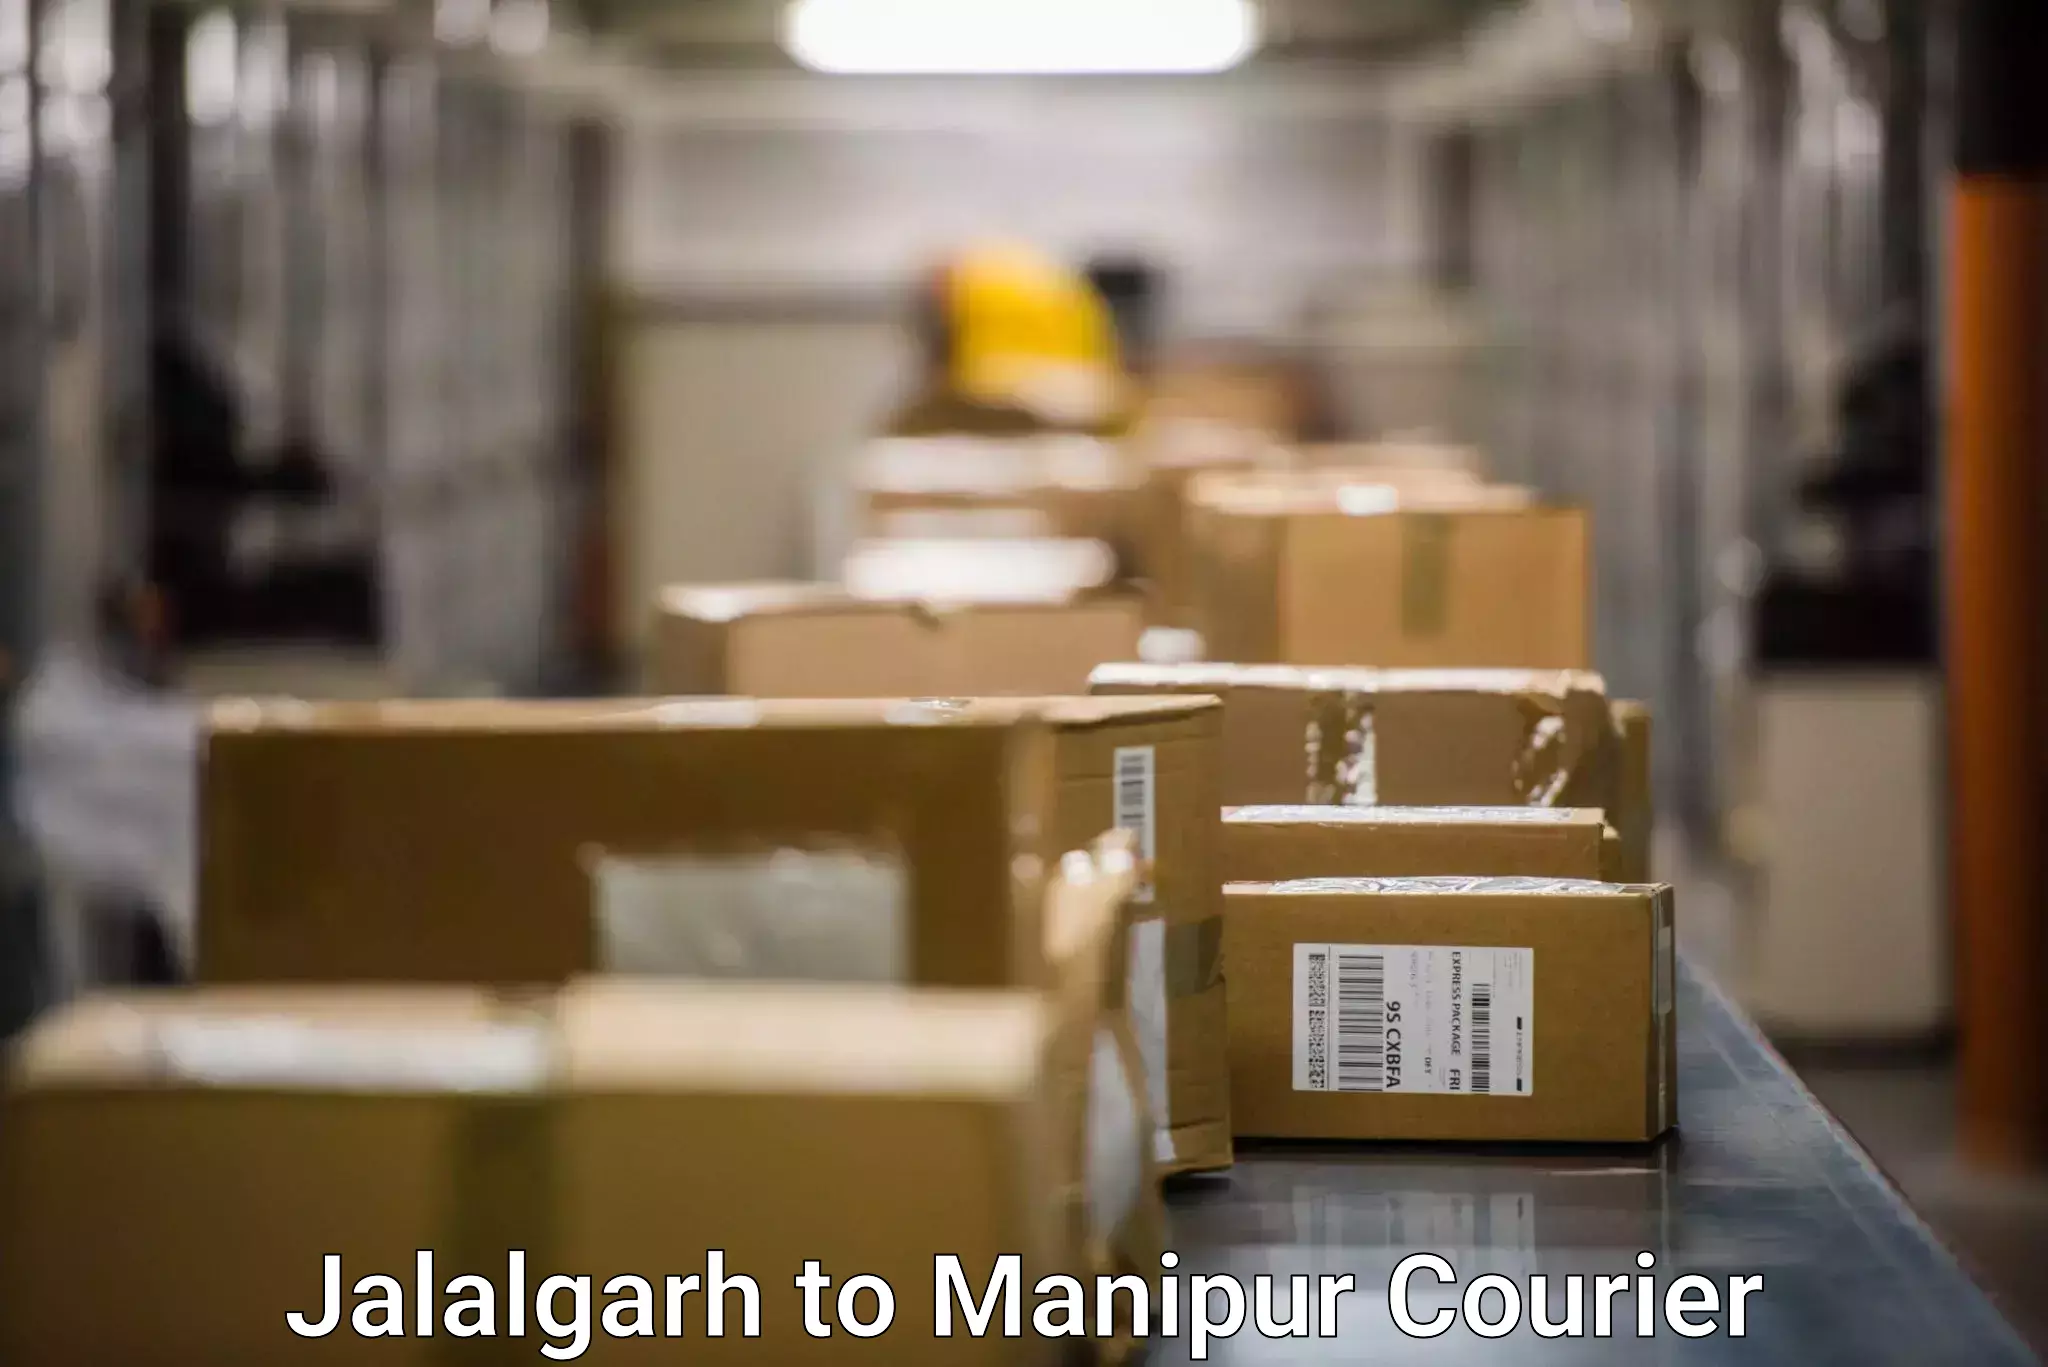 Courier service comparison Jalalgarh to Kakching